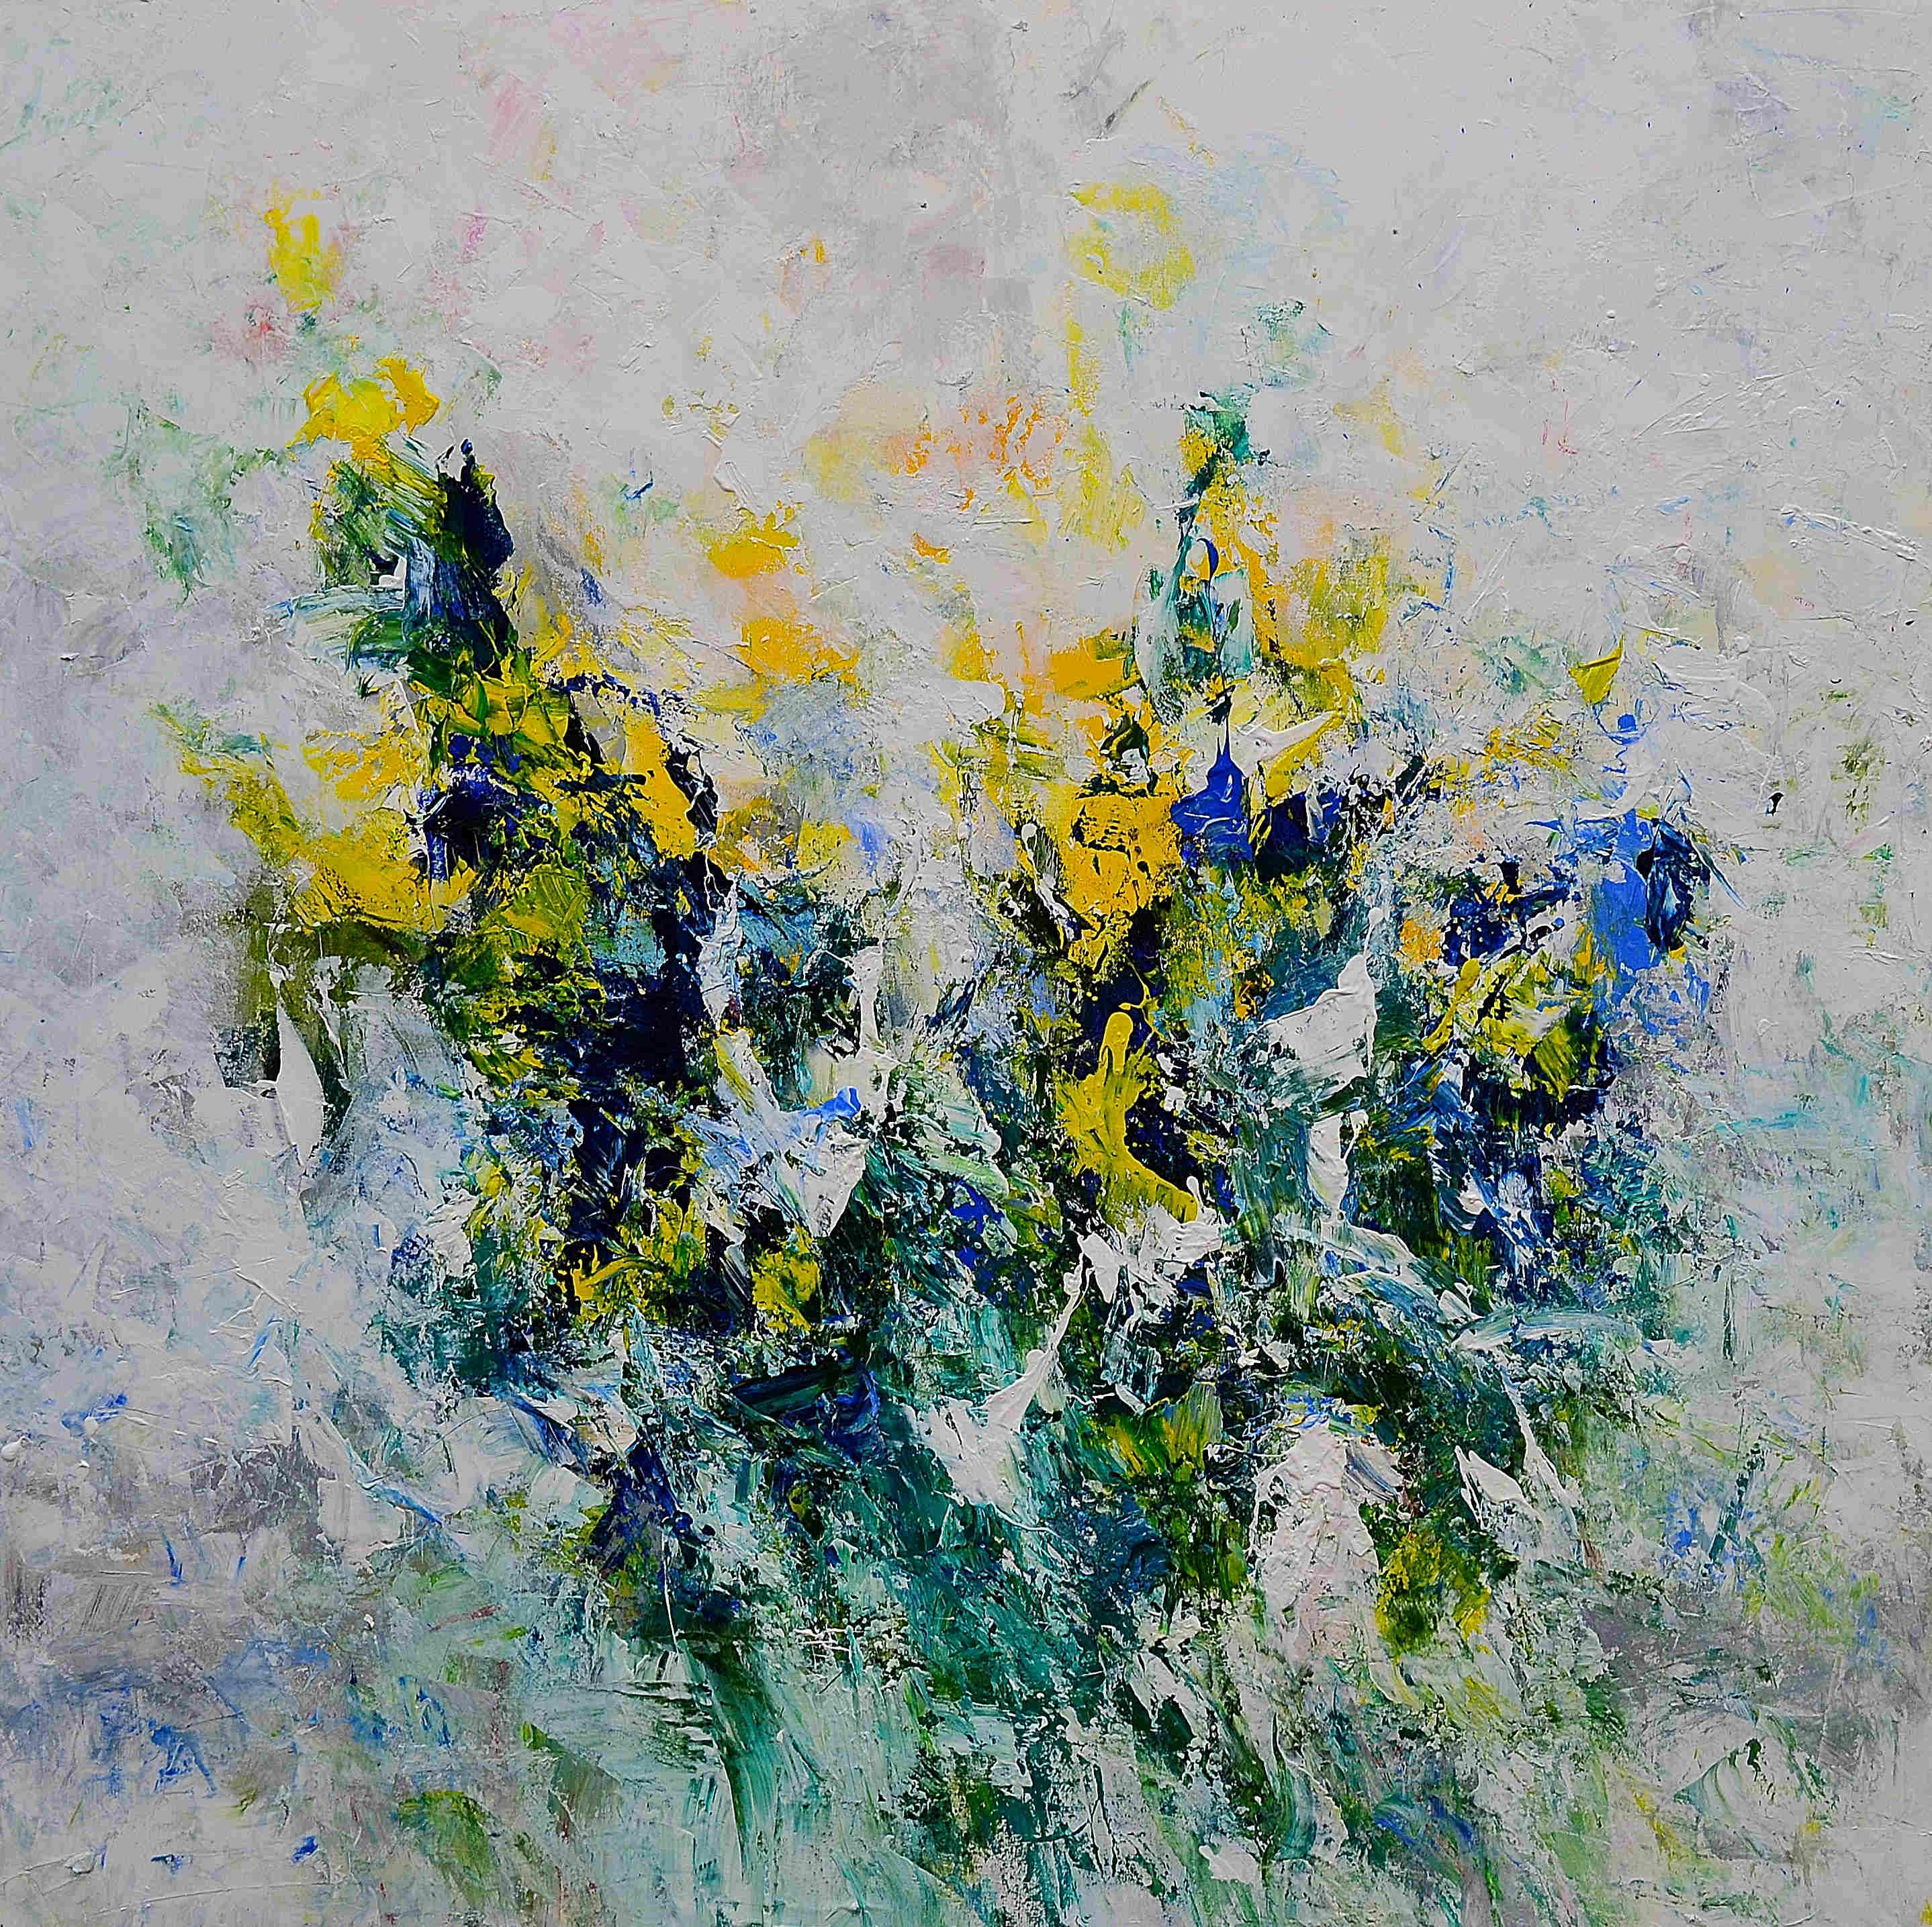 'Spring Colour, Studio IV' by artist Matthew Bourne